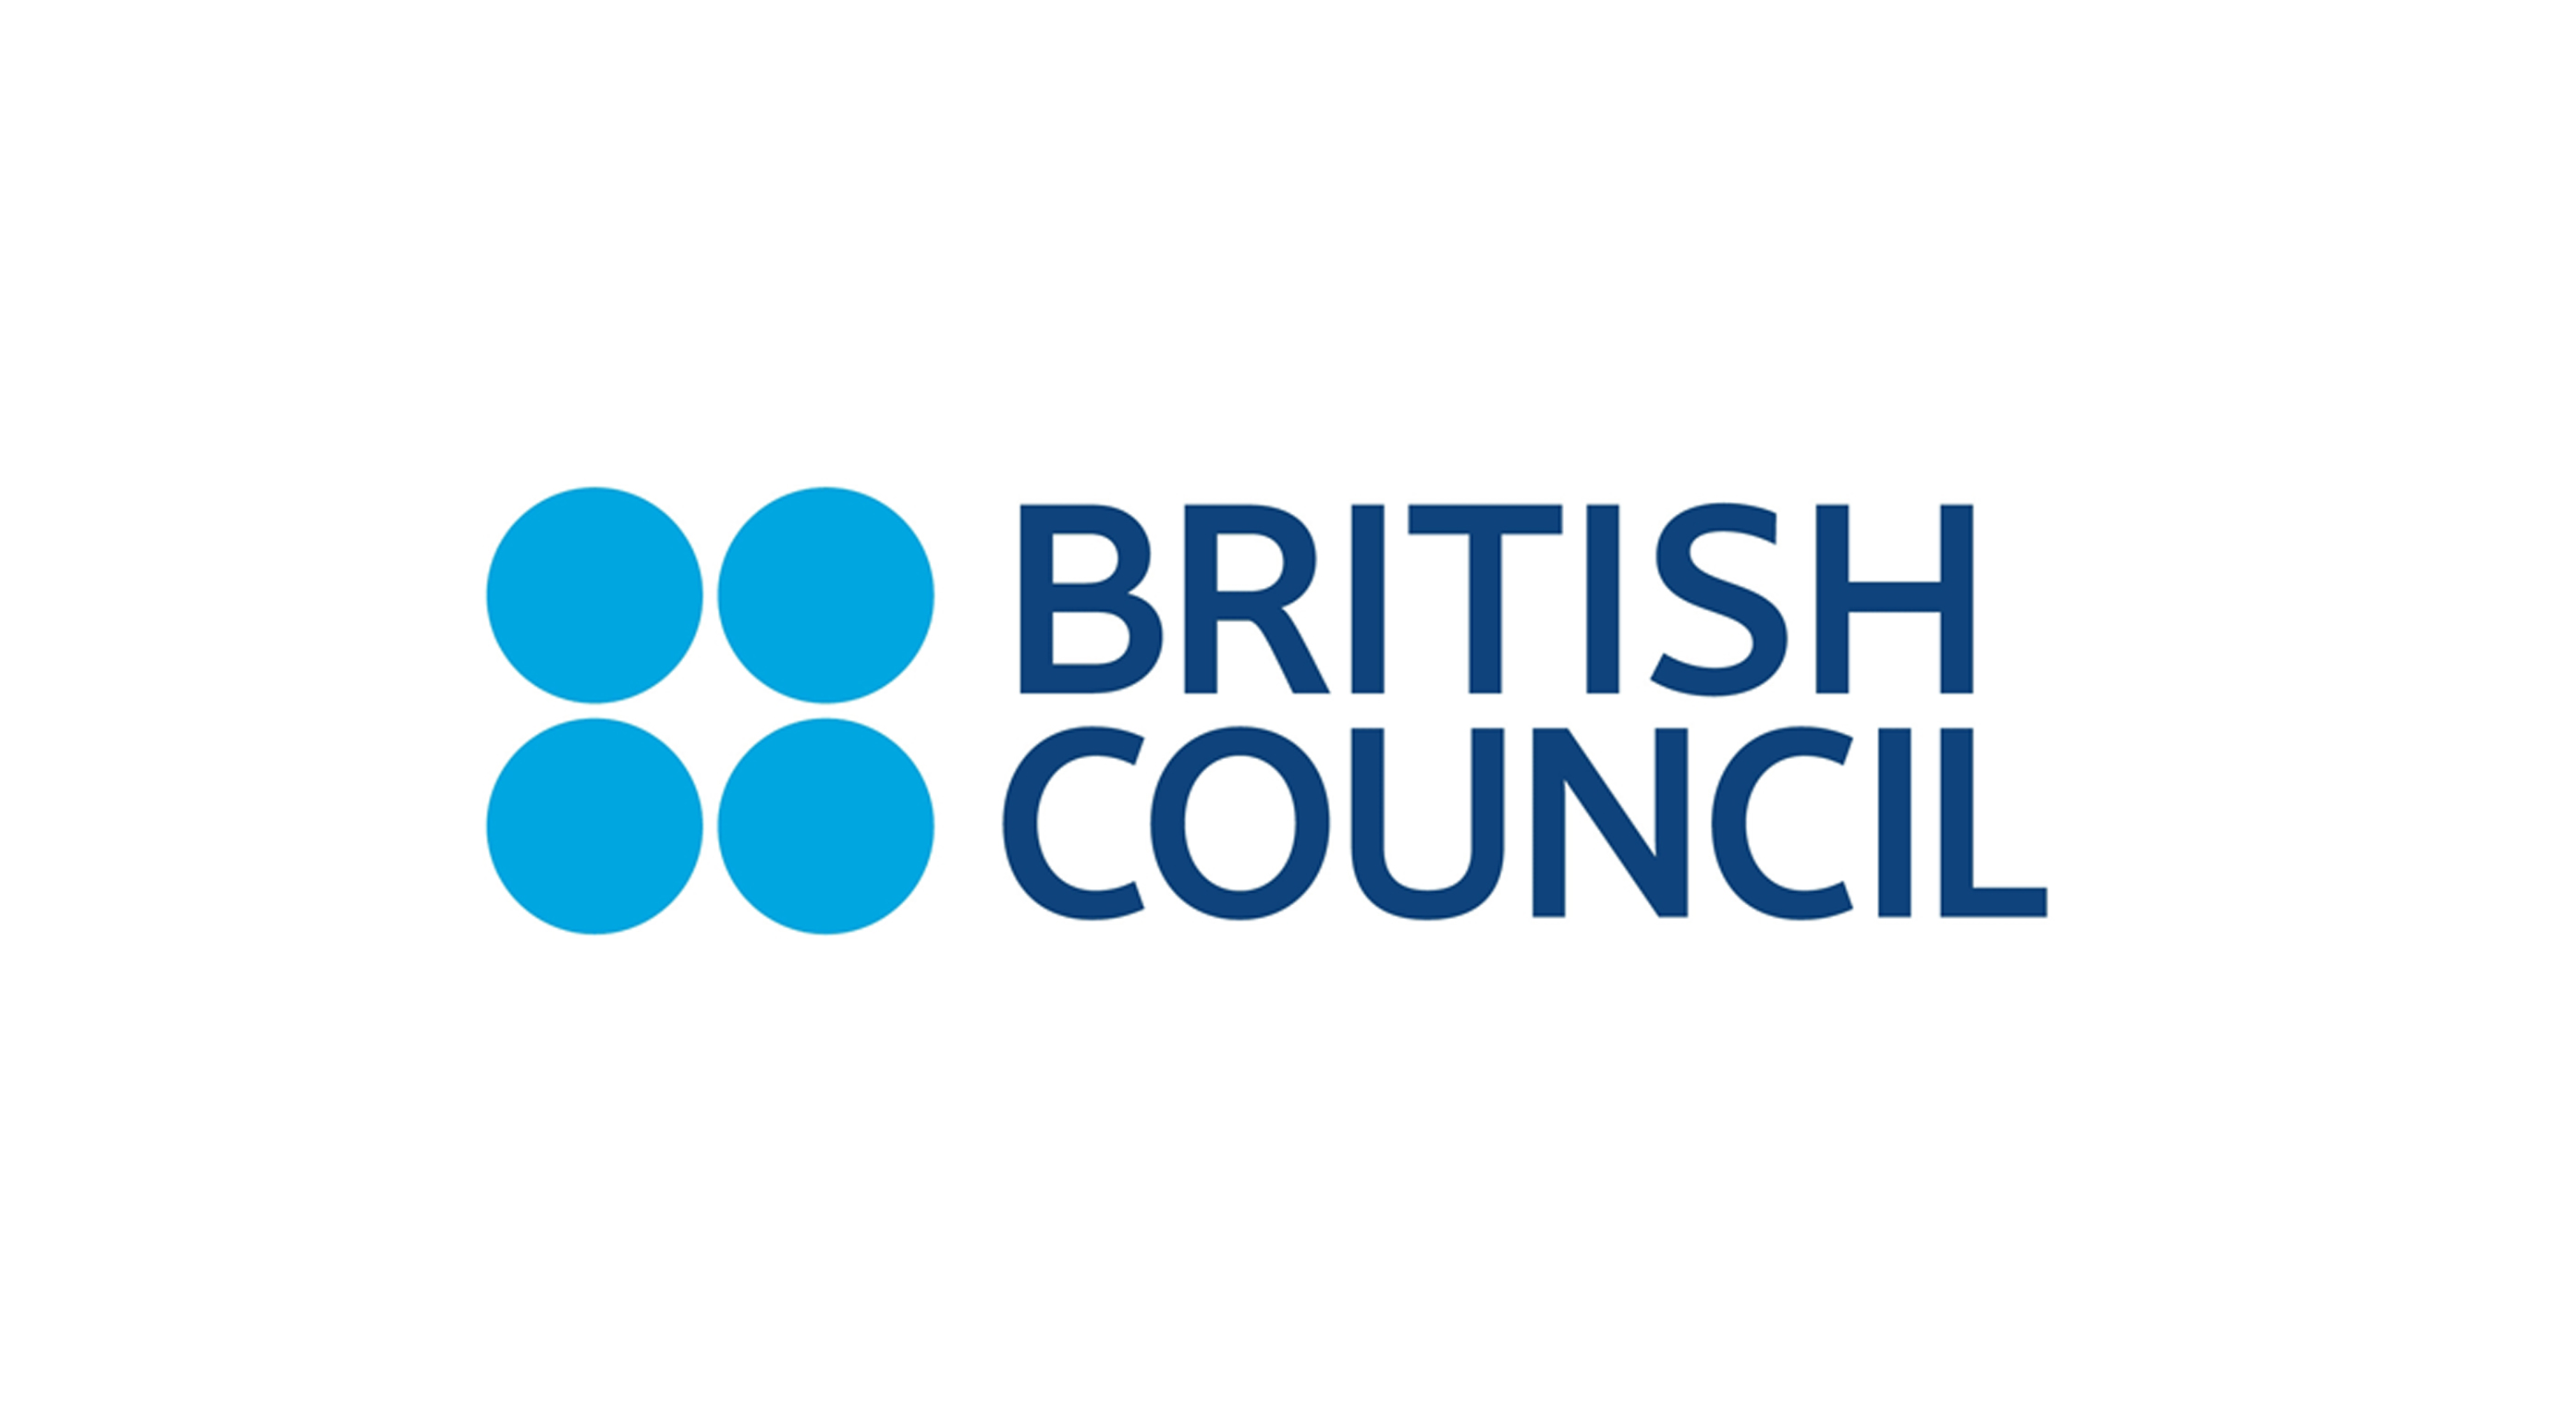 Https learnenglishteens britishcouncil org skills. British Council. Бритиш Консул. Британский совет. Логотип.